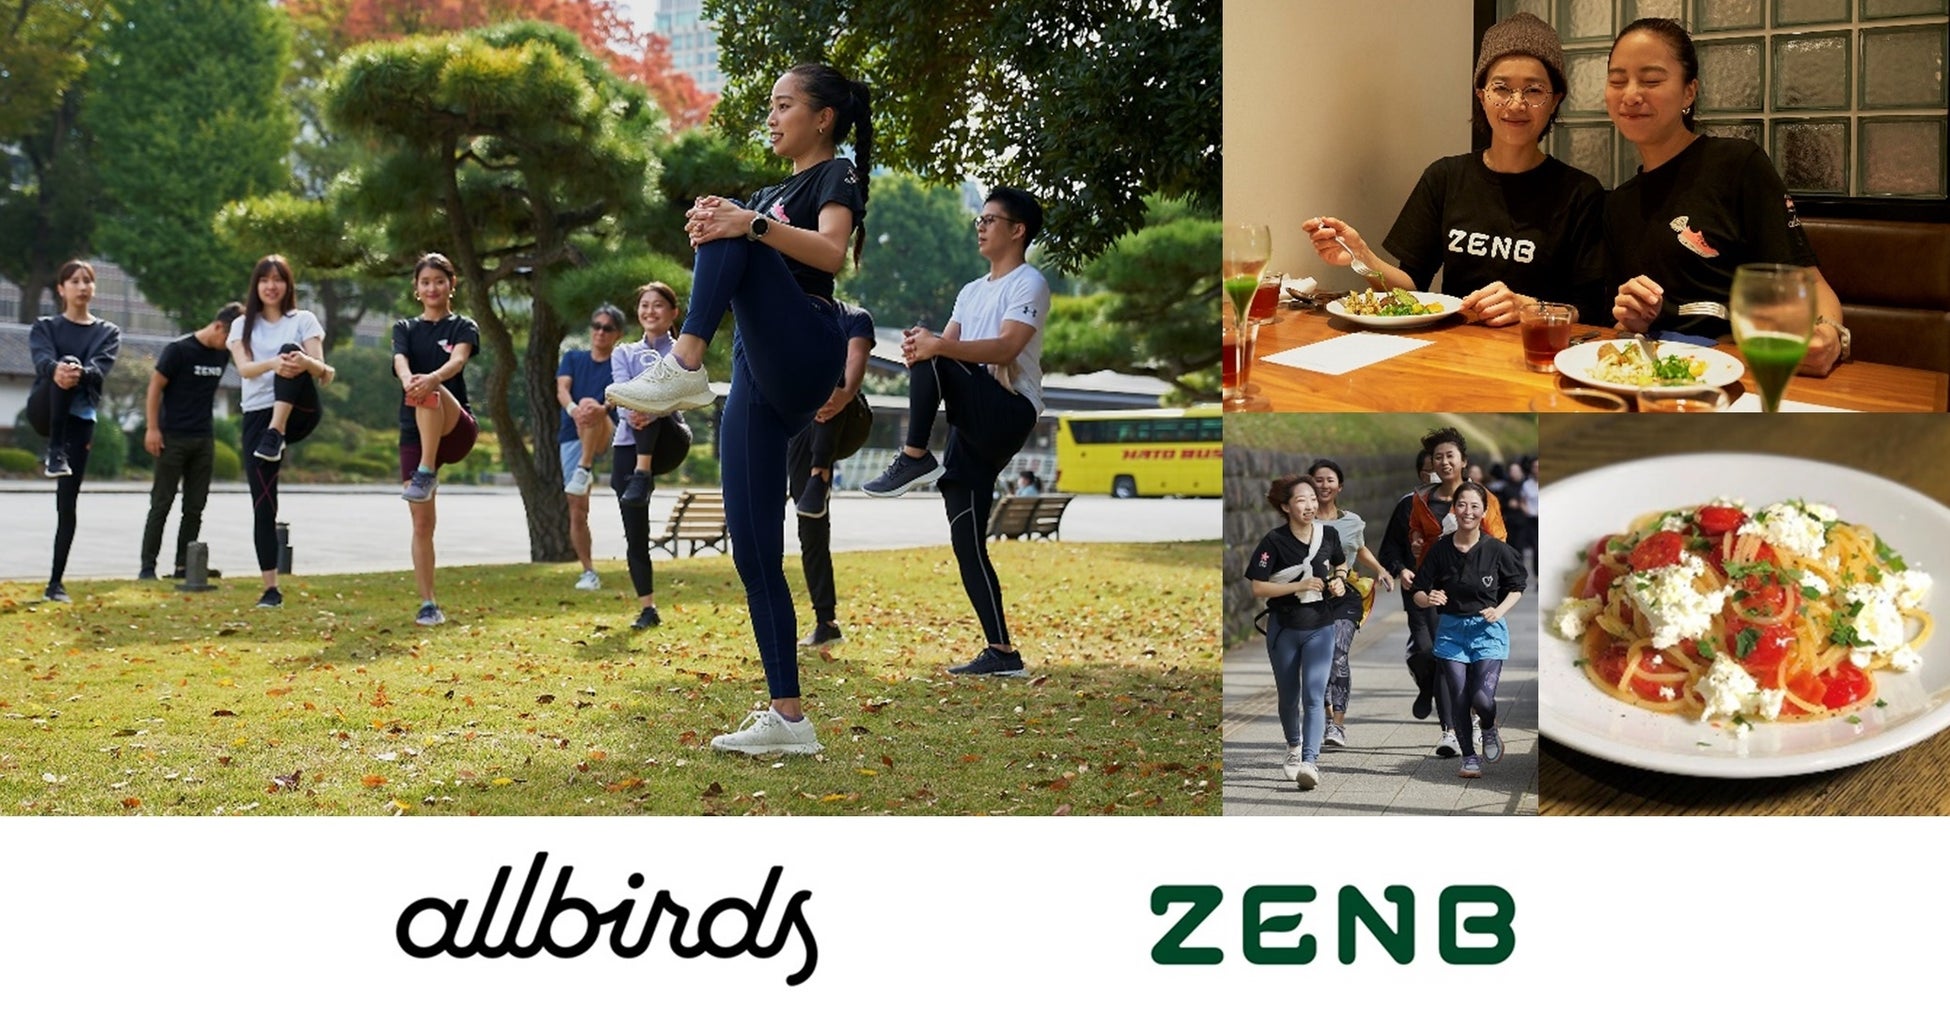 ZENBとAllbirdsのSakura Dashersがランニングと食を通じて、地球にも人にも優しく“続ける”を後押しする「続けて出会う、新しい自分。」を開催